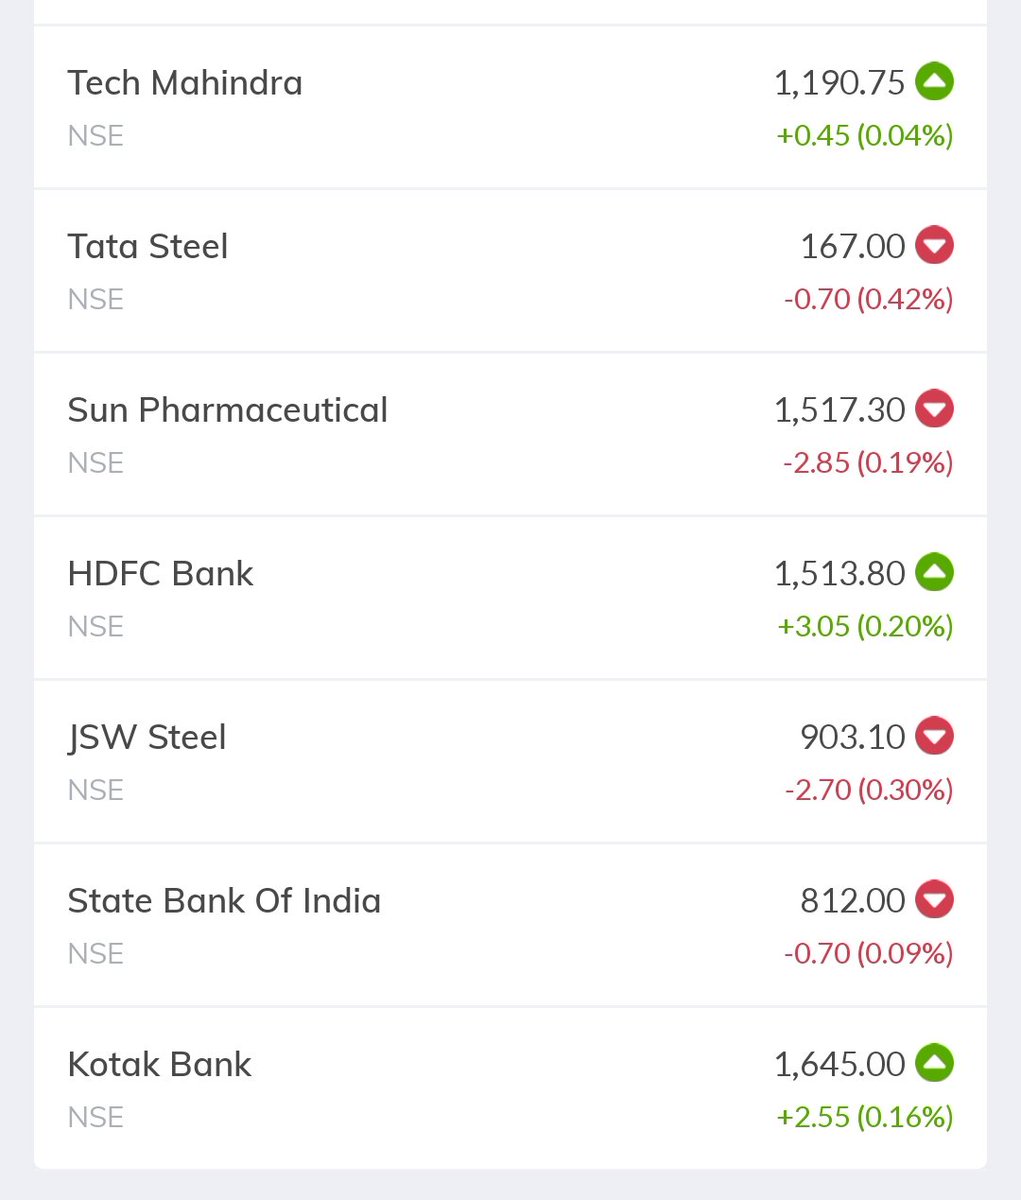 WATCH THE STOCKS TODAY 26/04/2024

Tech Mahindra
TATA STEEL 
SUNPHARMA
HDFC Bank
JSW STEEL
SBIN
KOTAK BANK